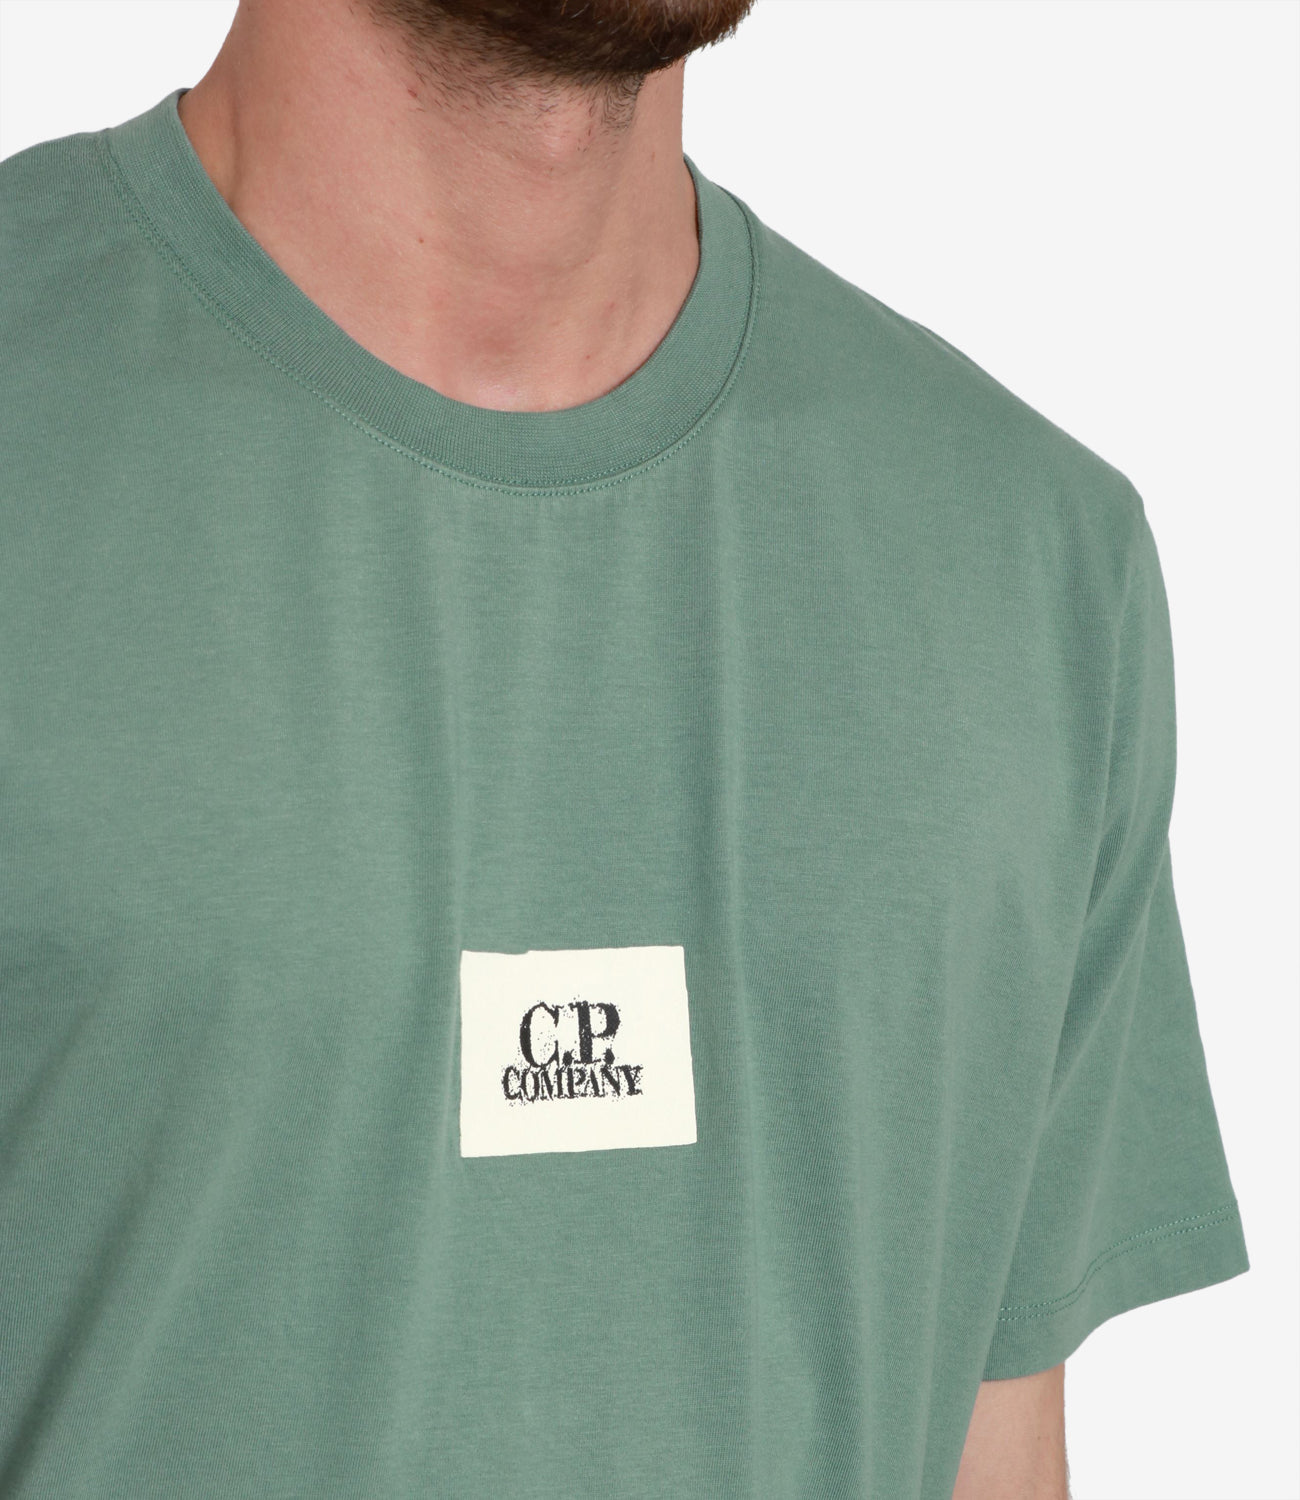 C.P. Company | Sage Green T-Shirt